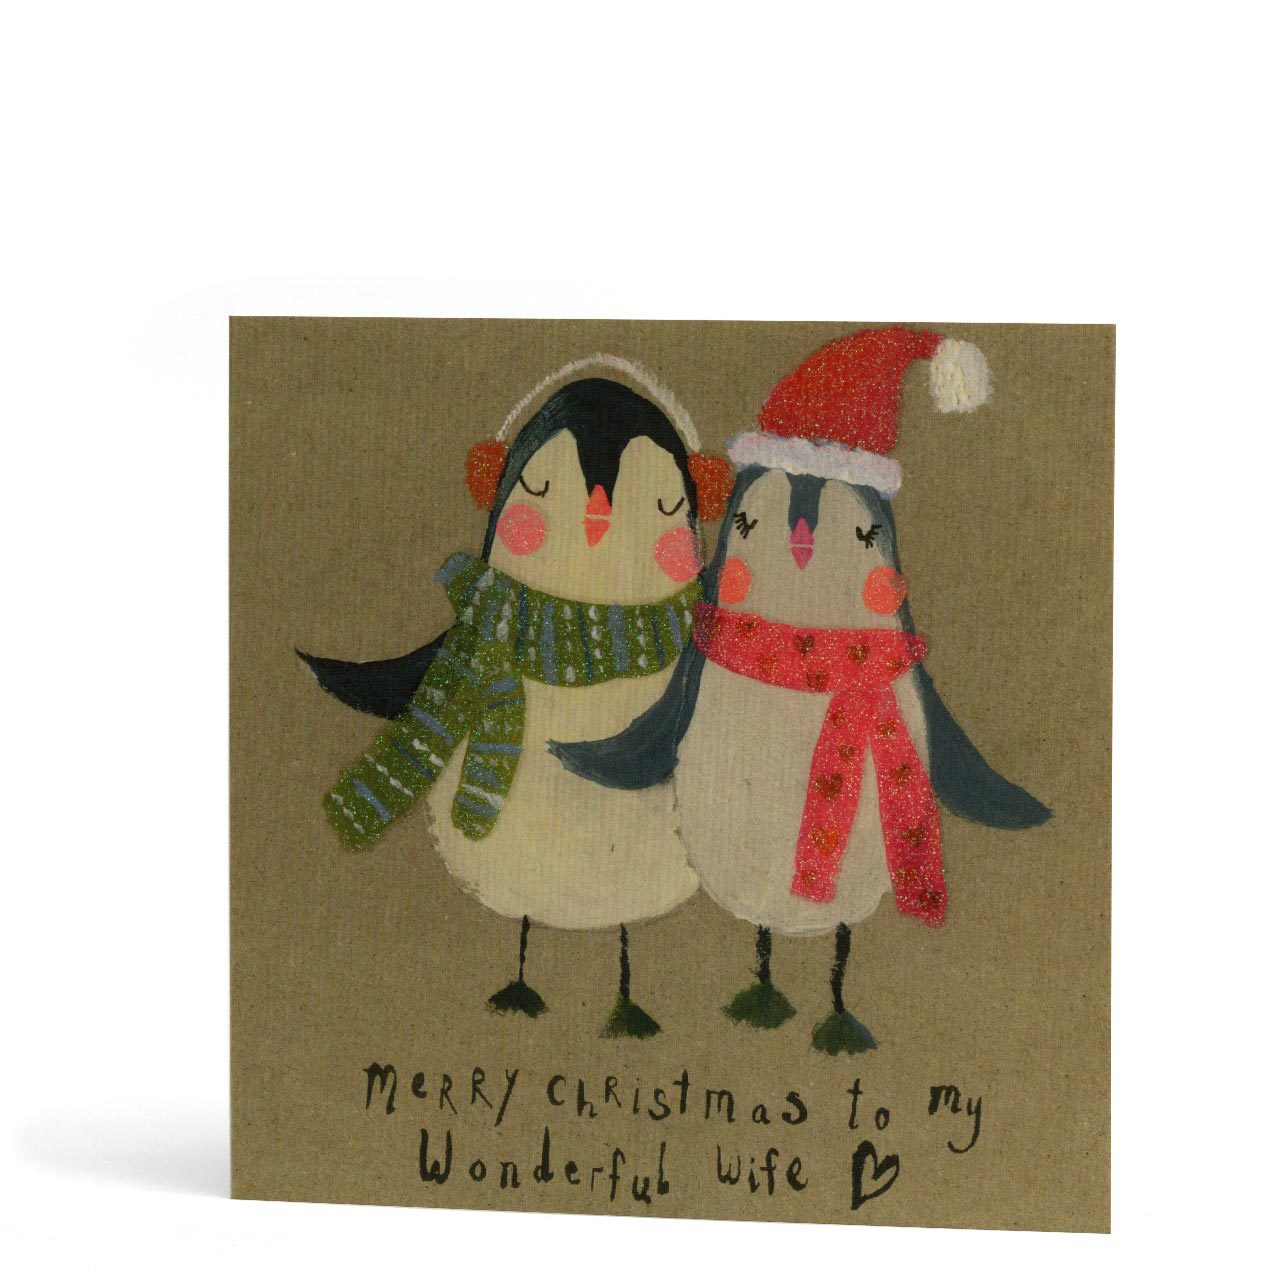 Merry Christmas Wonderful Wife Greeting Card